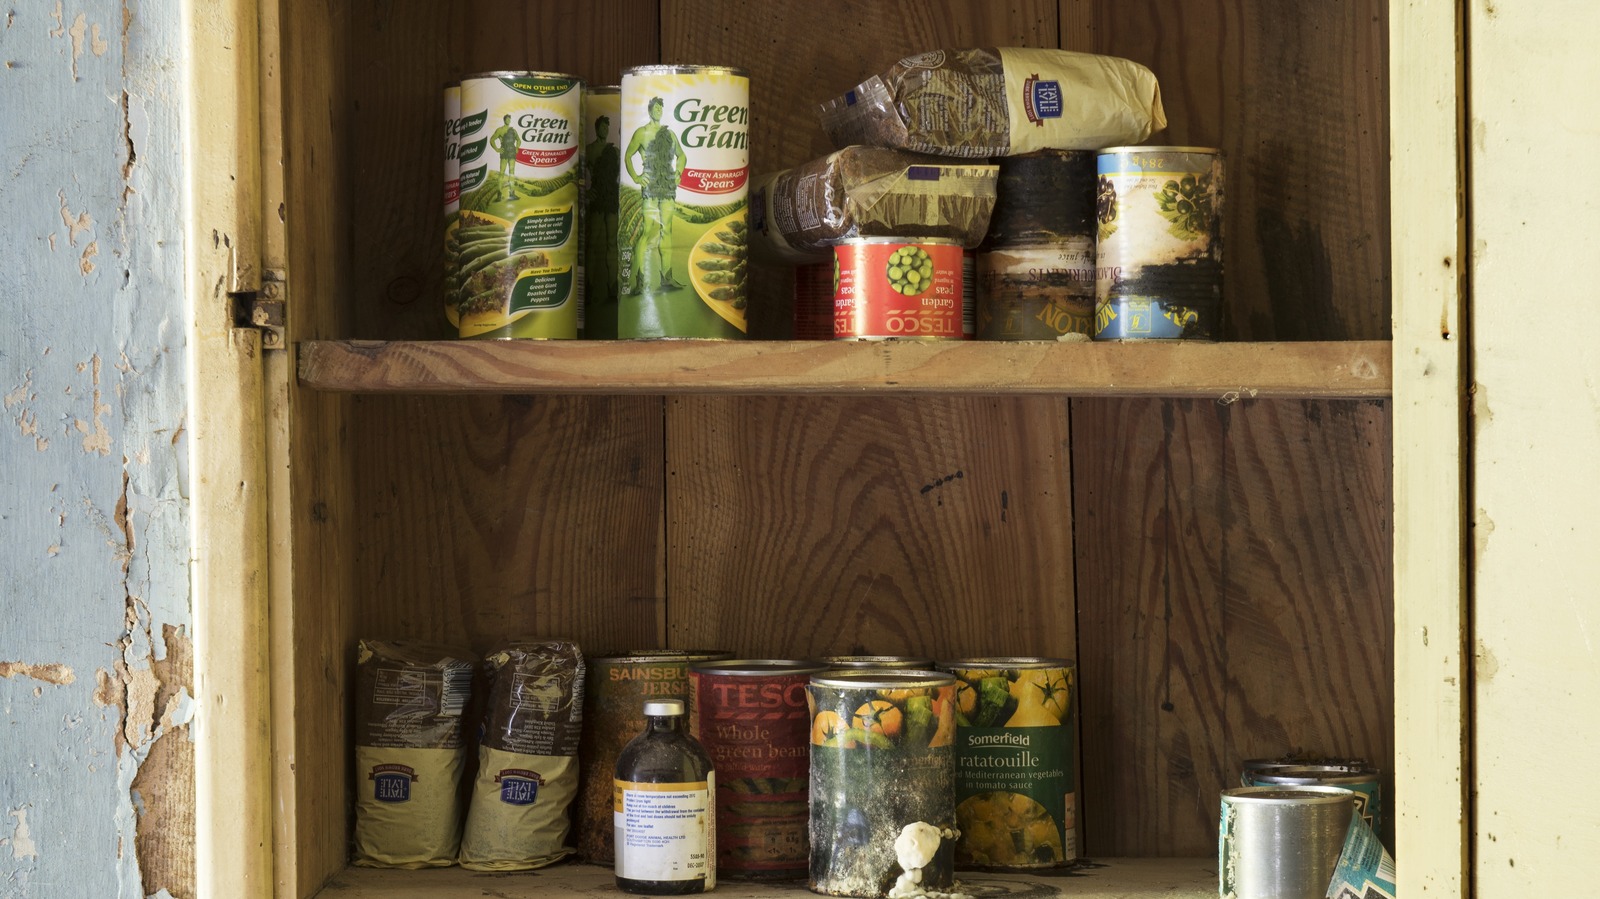 canned food organization